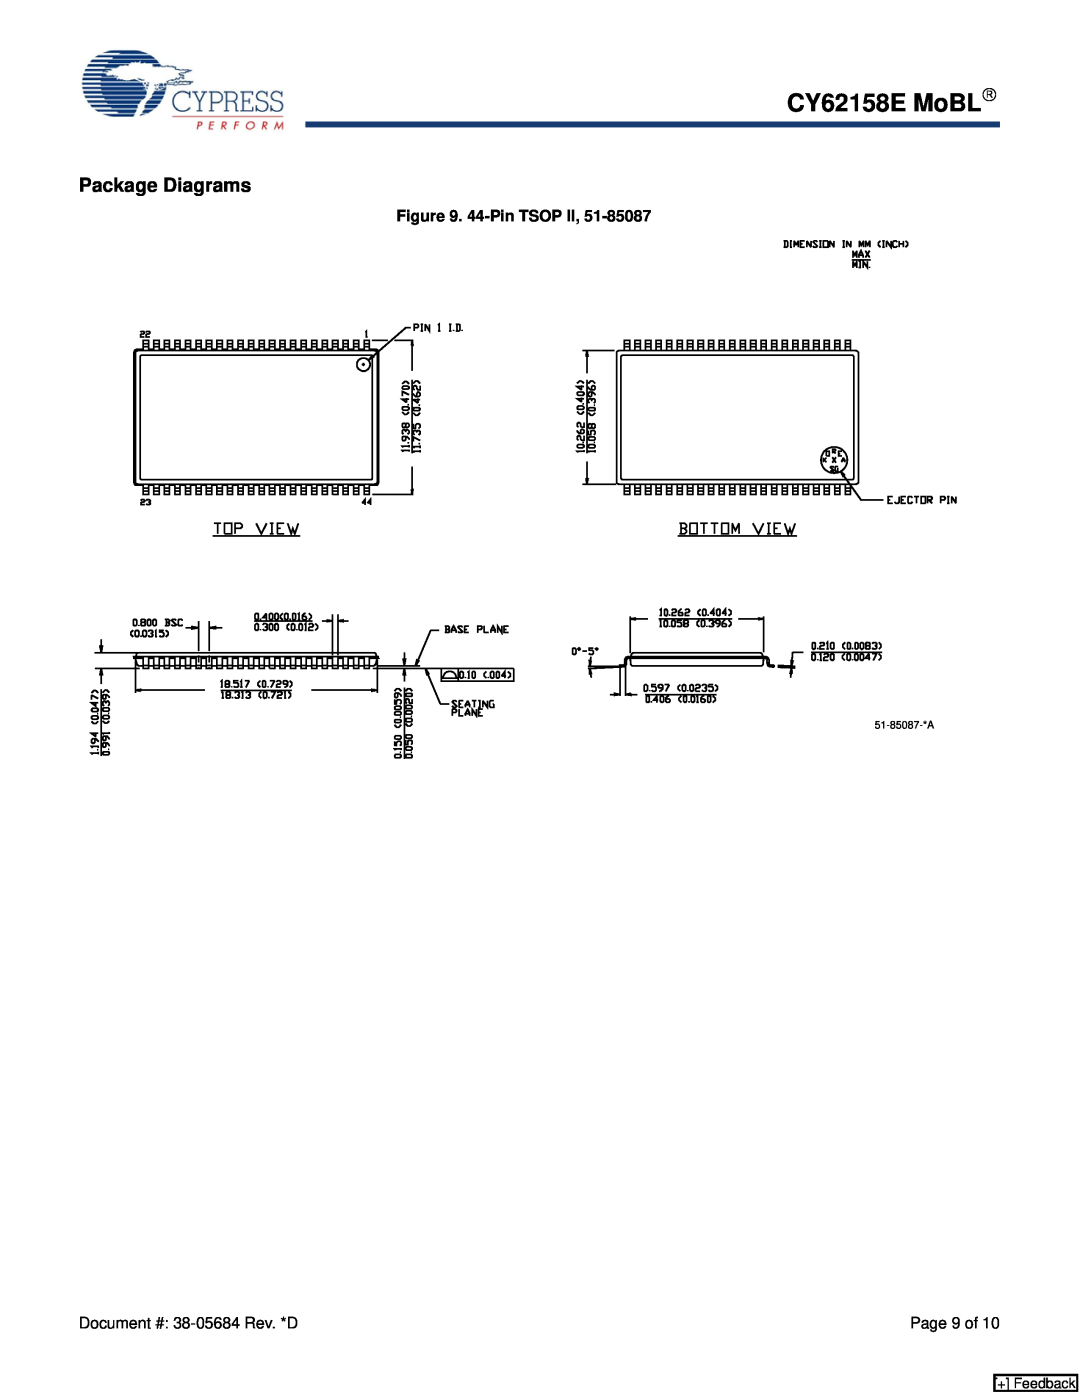 Cypress manual Package Diagrams, CY62158E MoBL→, 44-Pin TSOP II, + Feedback 